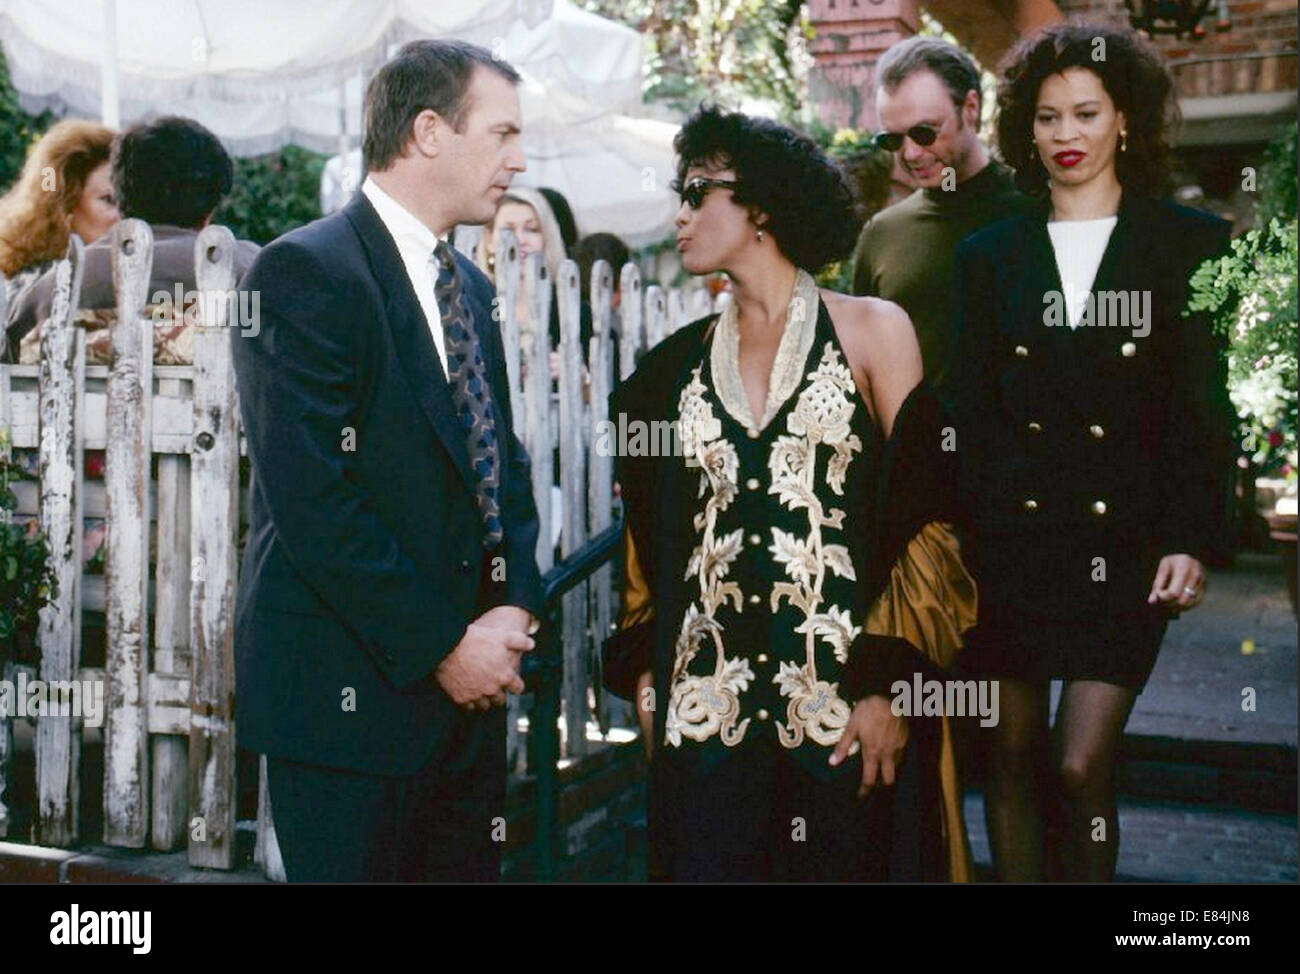 DER BODYGUARD 1992 Film mit von links Kevin Costner, Whitney Houston, Gary Kemp, Michele Lamar Richards Stockfoto